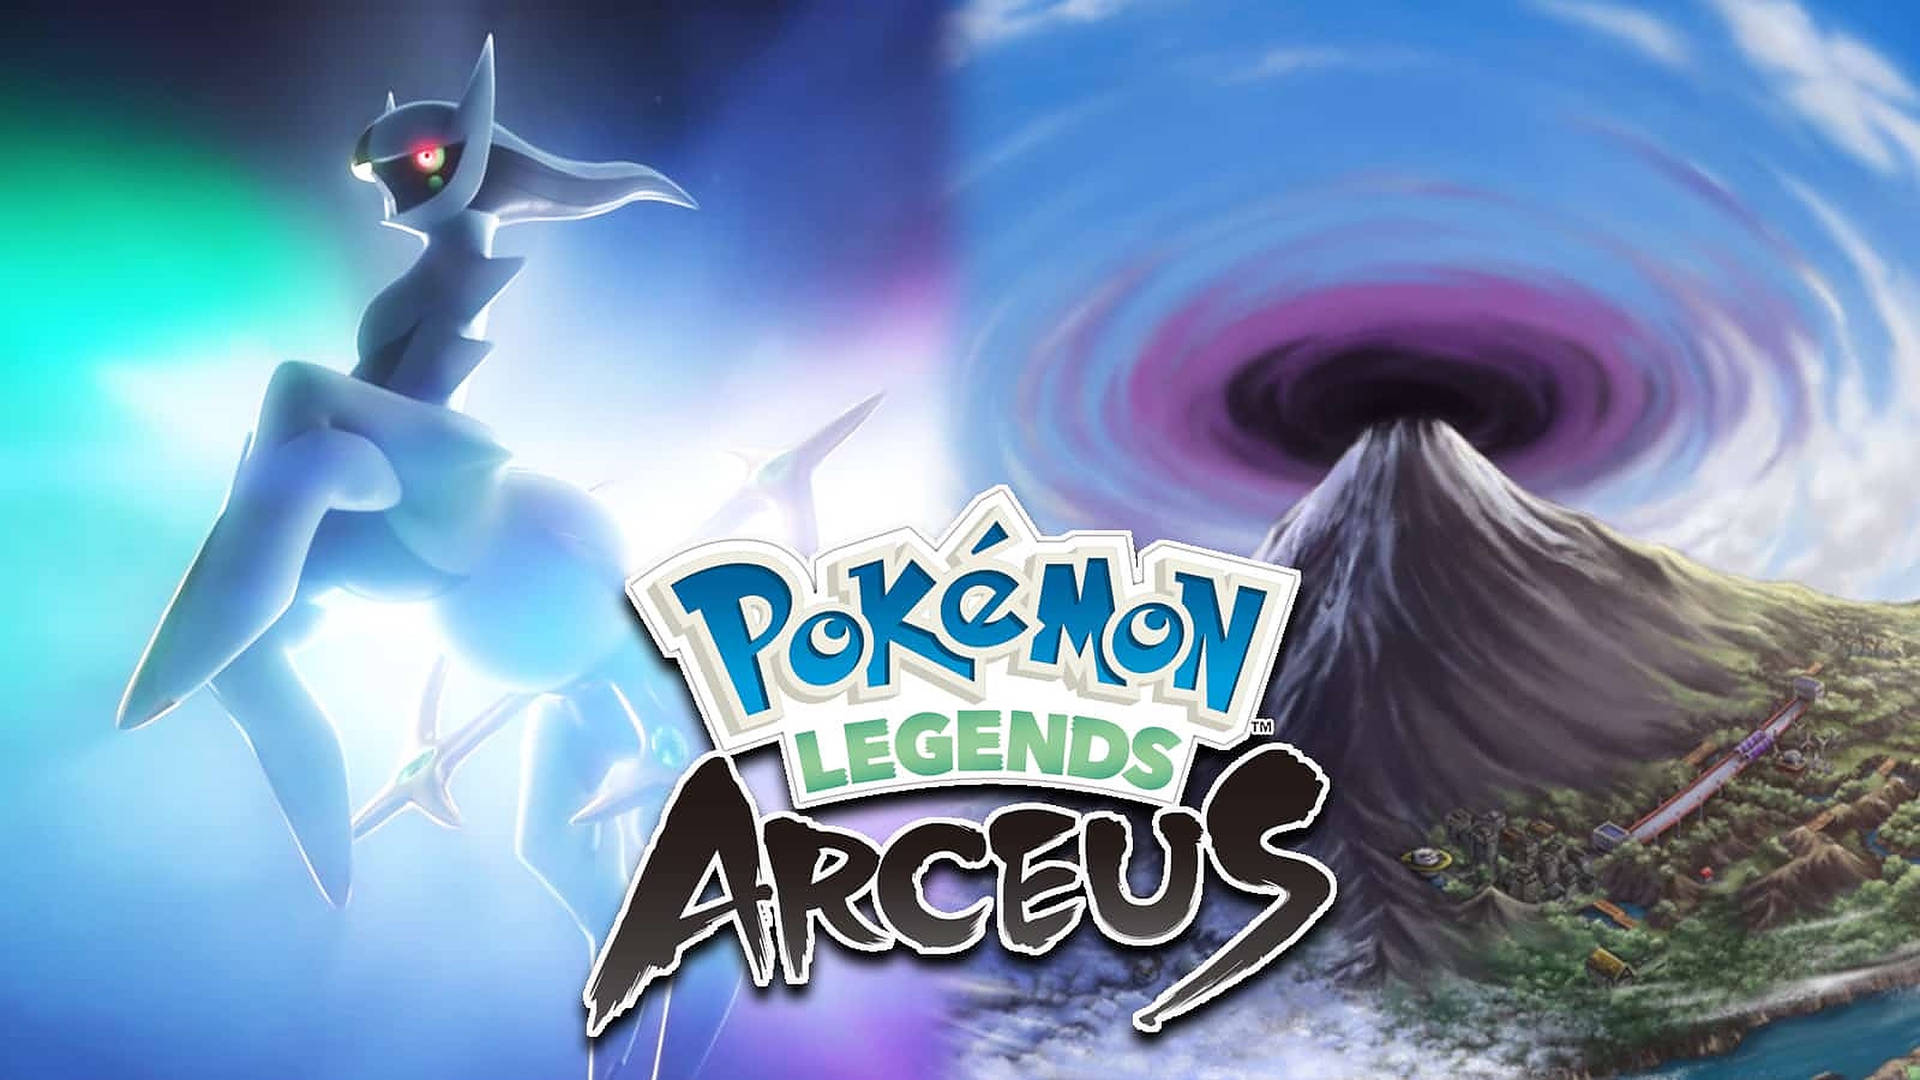 Pokemon Legends Arceus Action Game Wallpaper